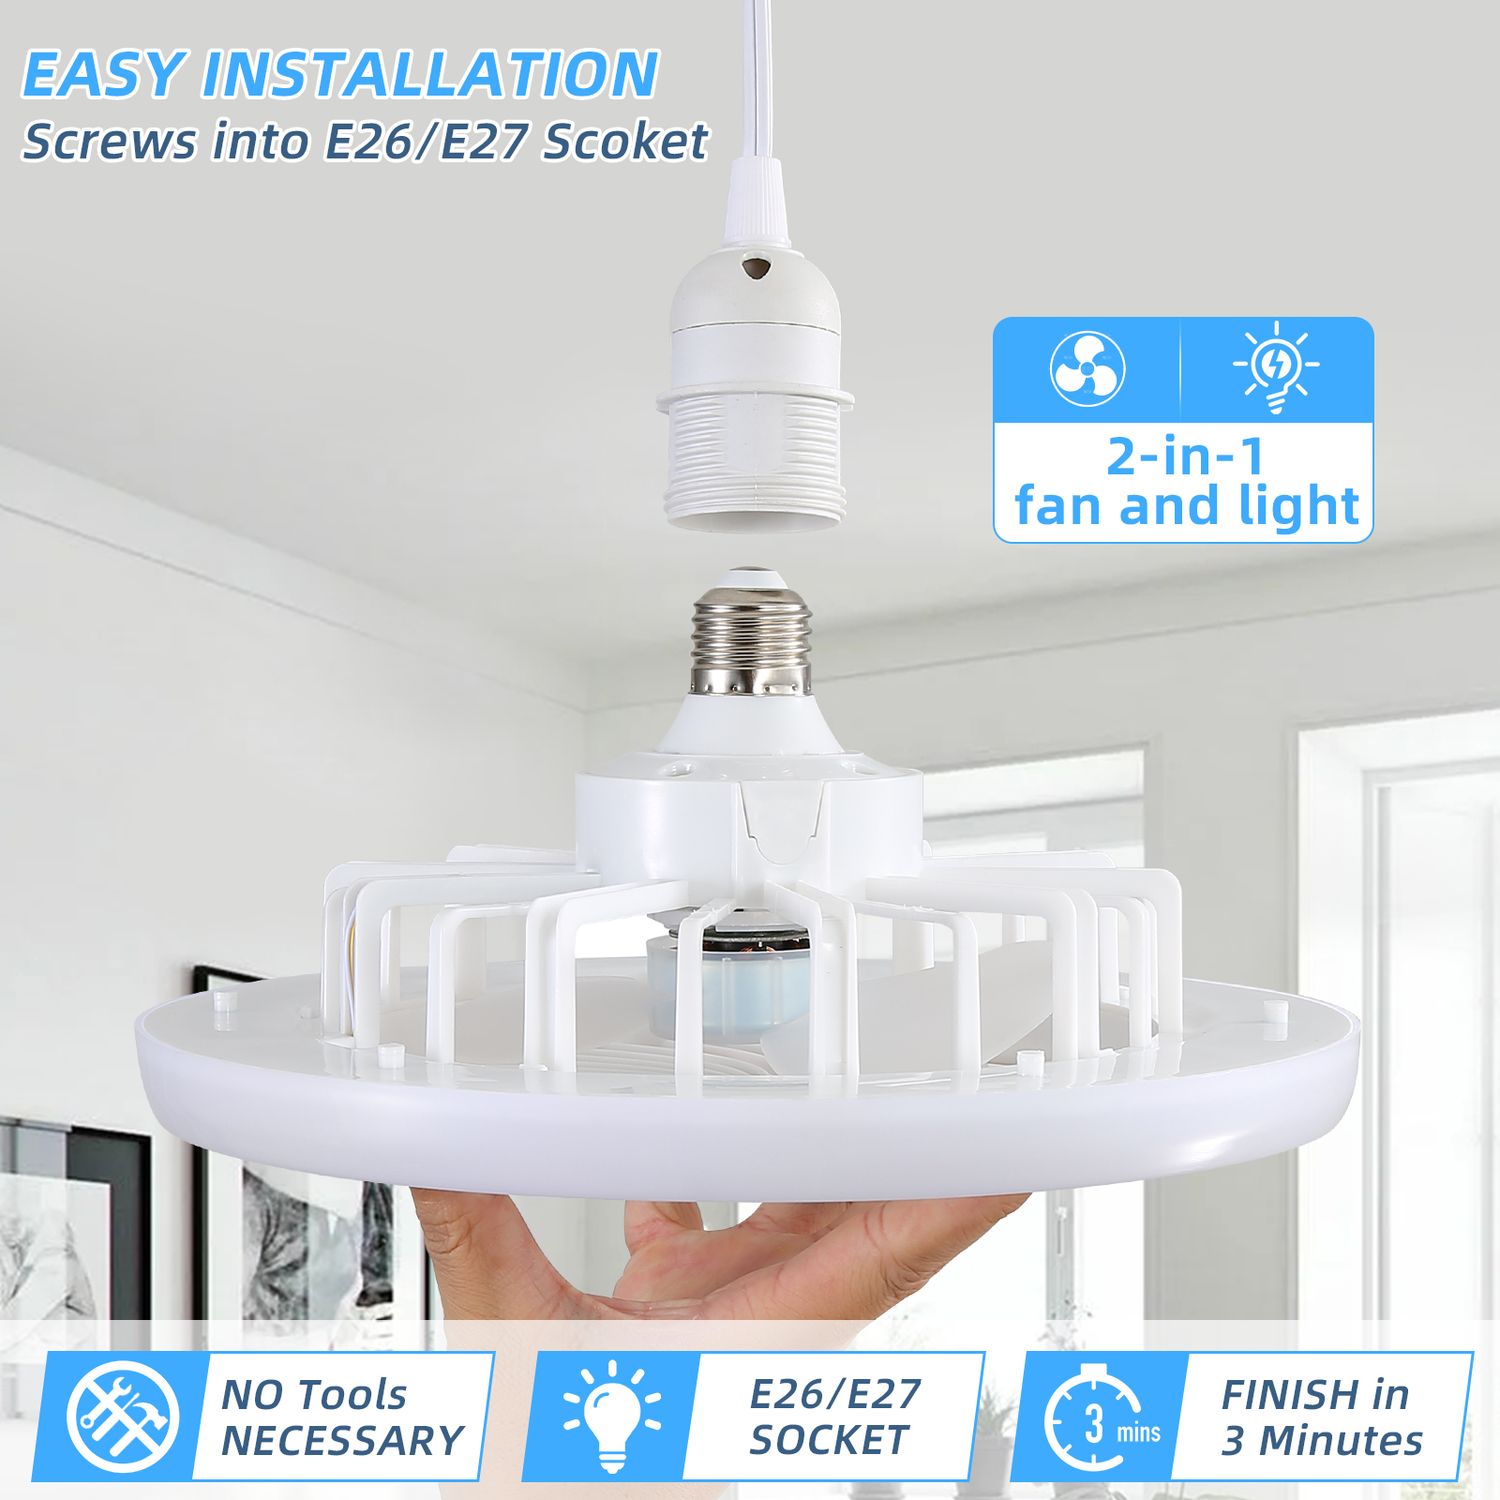 easy installation of Sofucor 10“ Socket Ceiling Fan: screws into E26/E27 socket